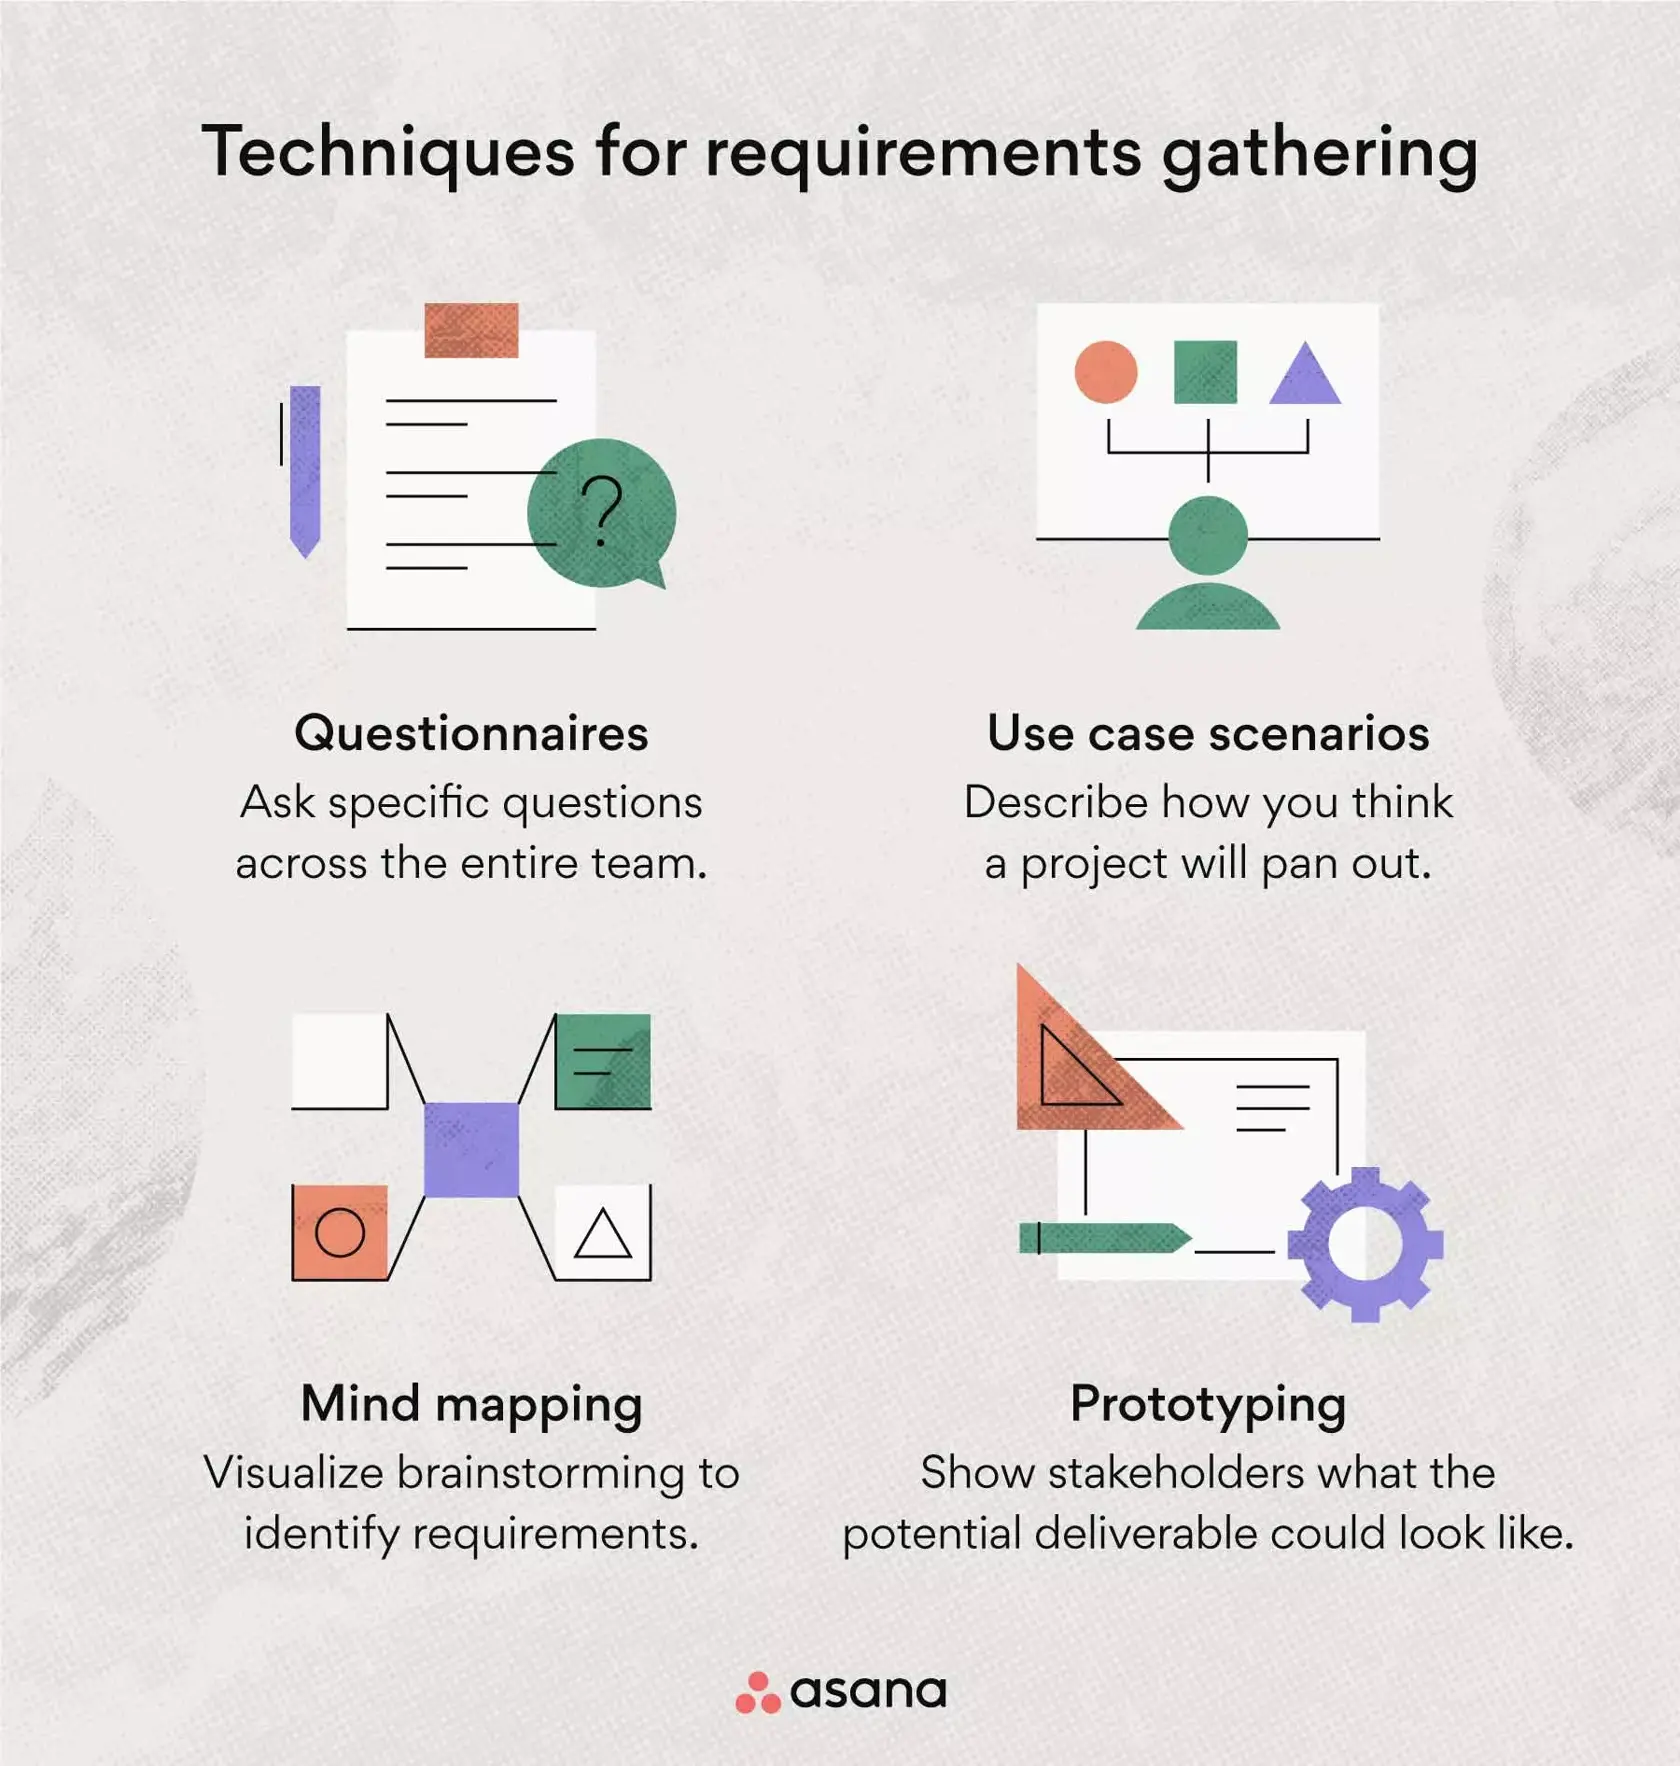 Requirements gathering techniques